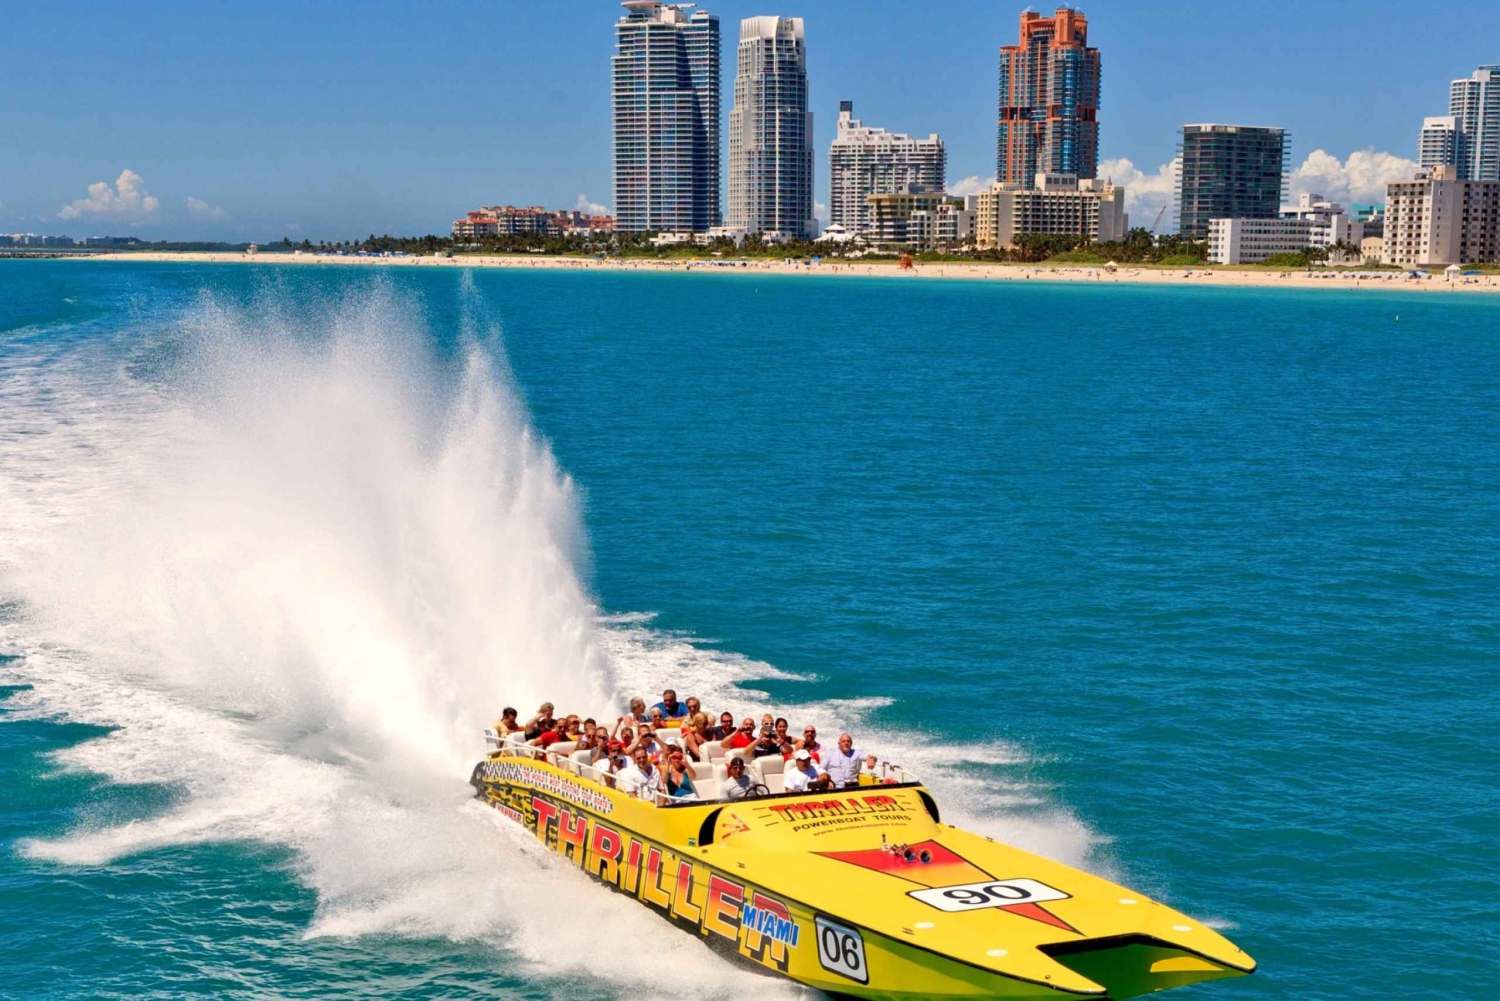 Miami Combo: Everglades & Key West Snorkel & Speedboat